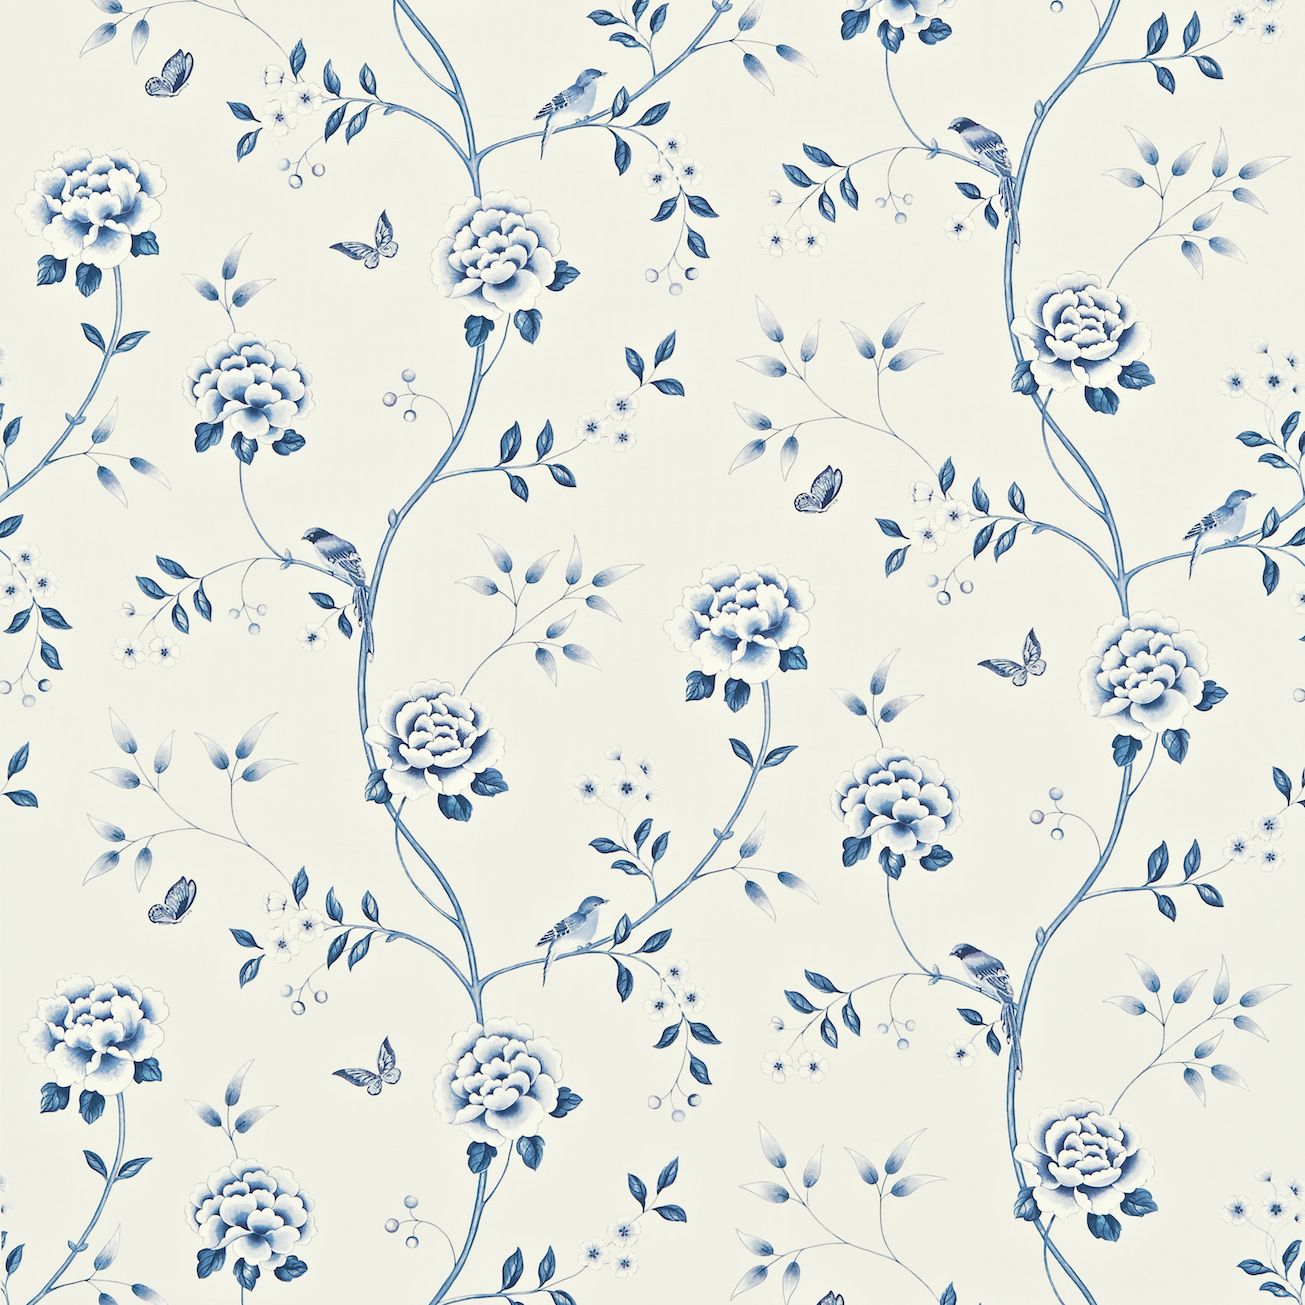 Pavillion Fabric | Richmond Hill Fabrics Collection | Sanderson Fabric